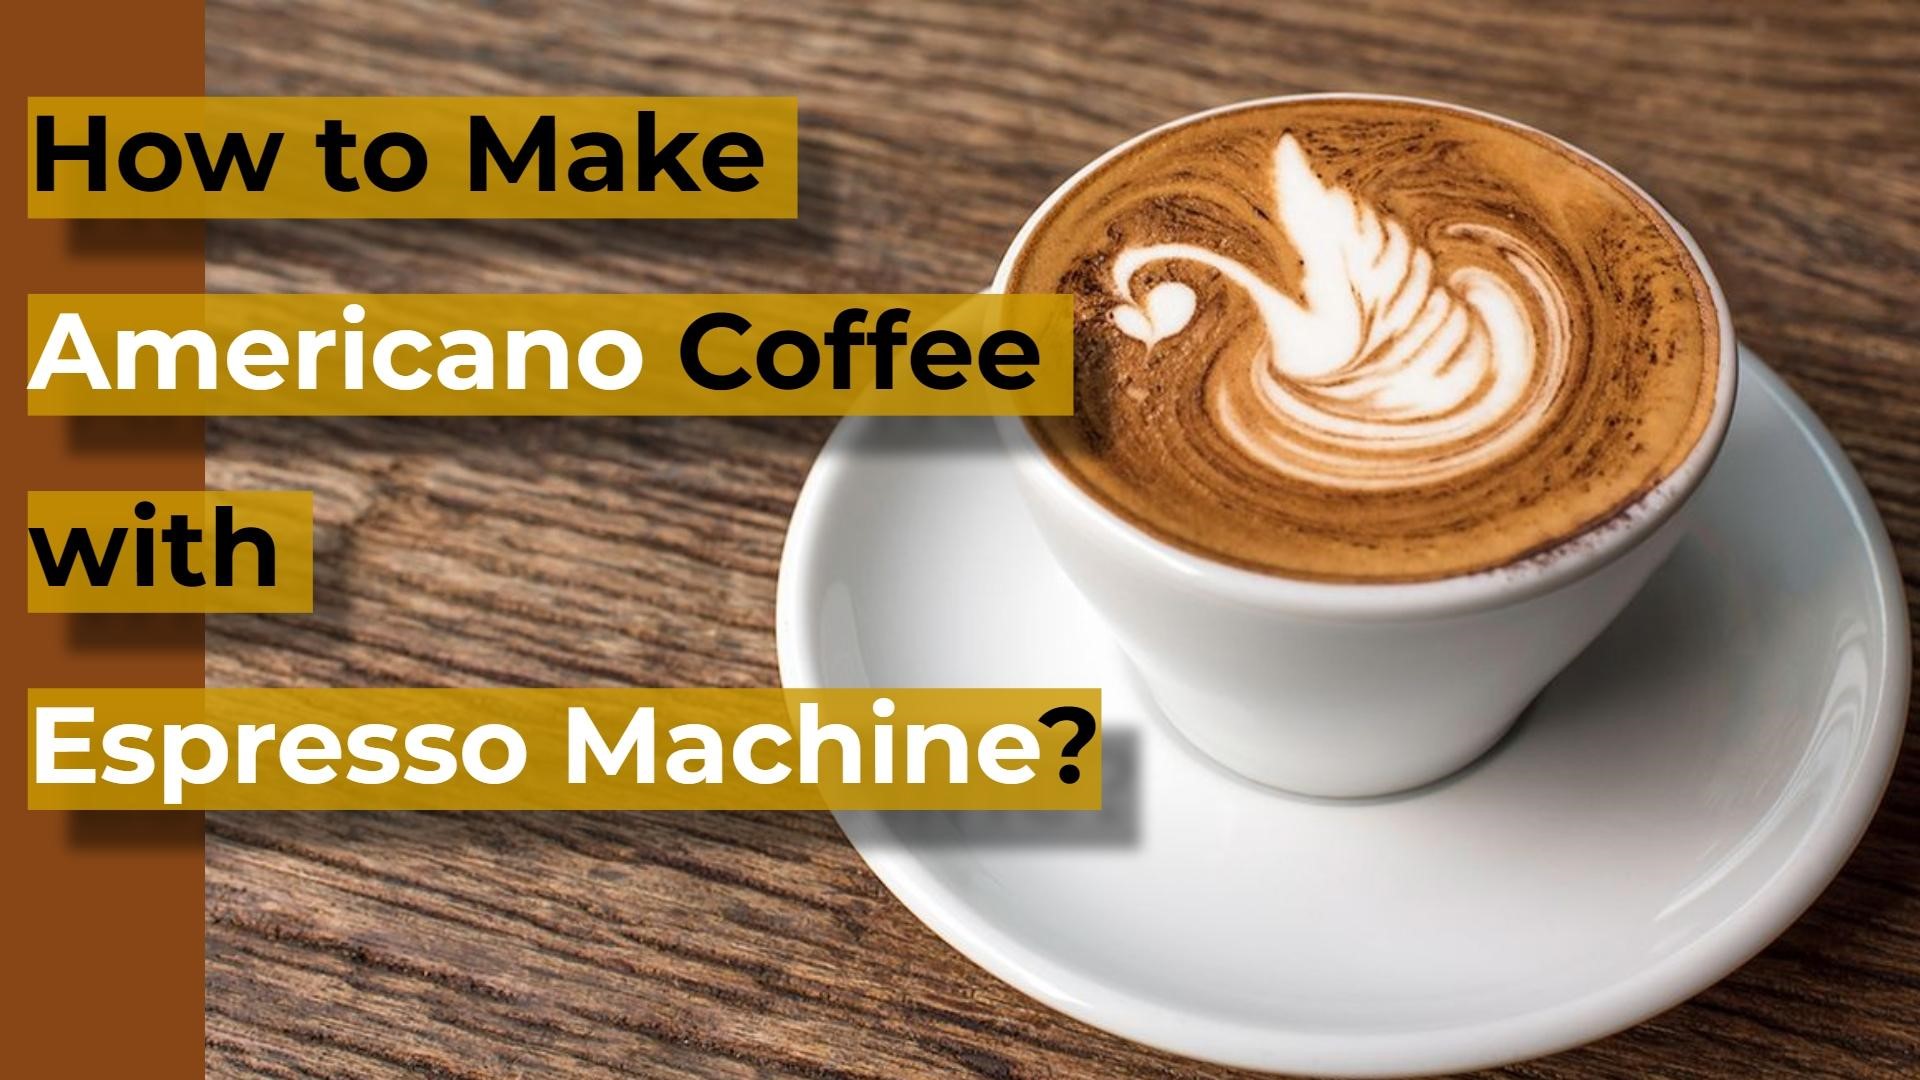 How to Make Americano Coffee with Espresso Machine